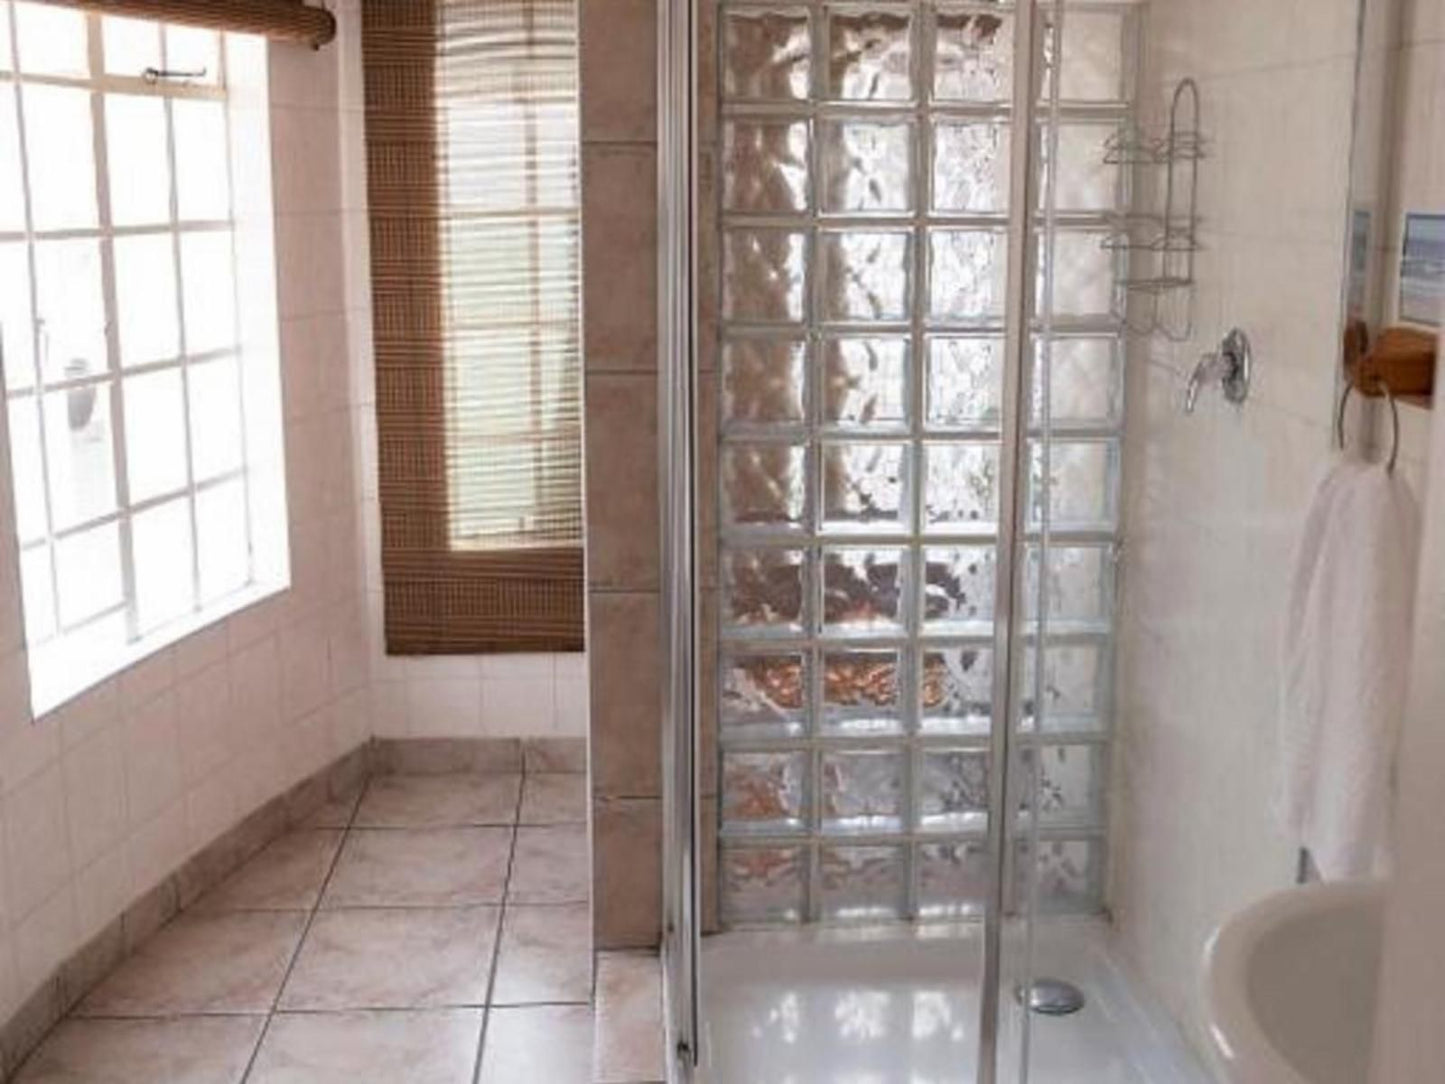 President Lodge Edenvale Johannesburg Gauteng South Africa Unsaturated, Door, Architecture, Bathroom